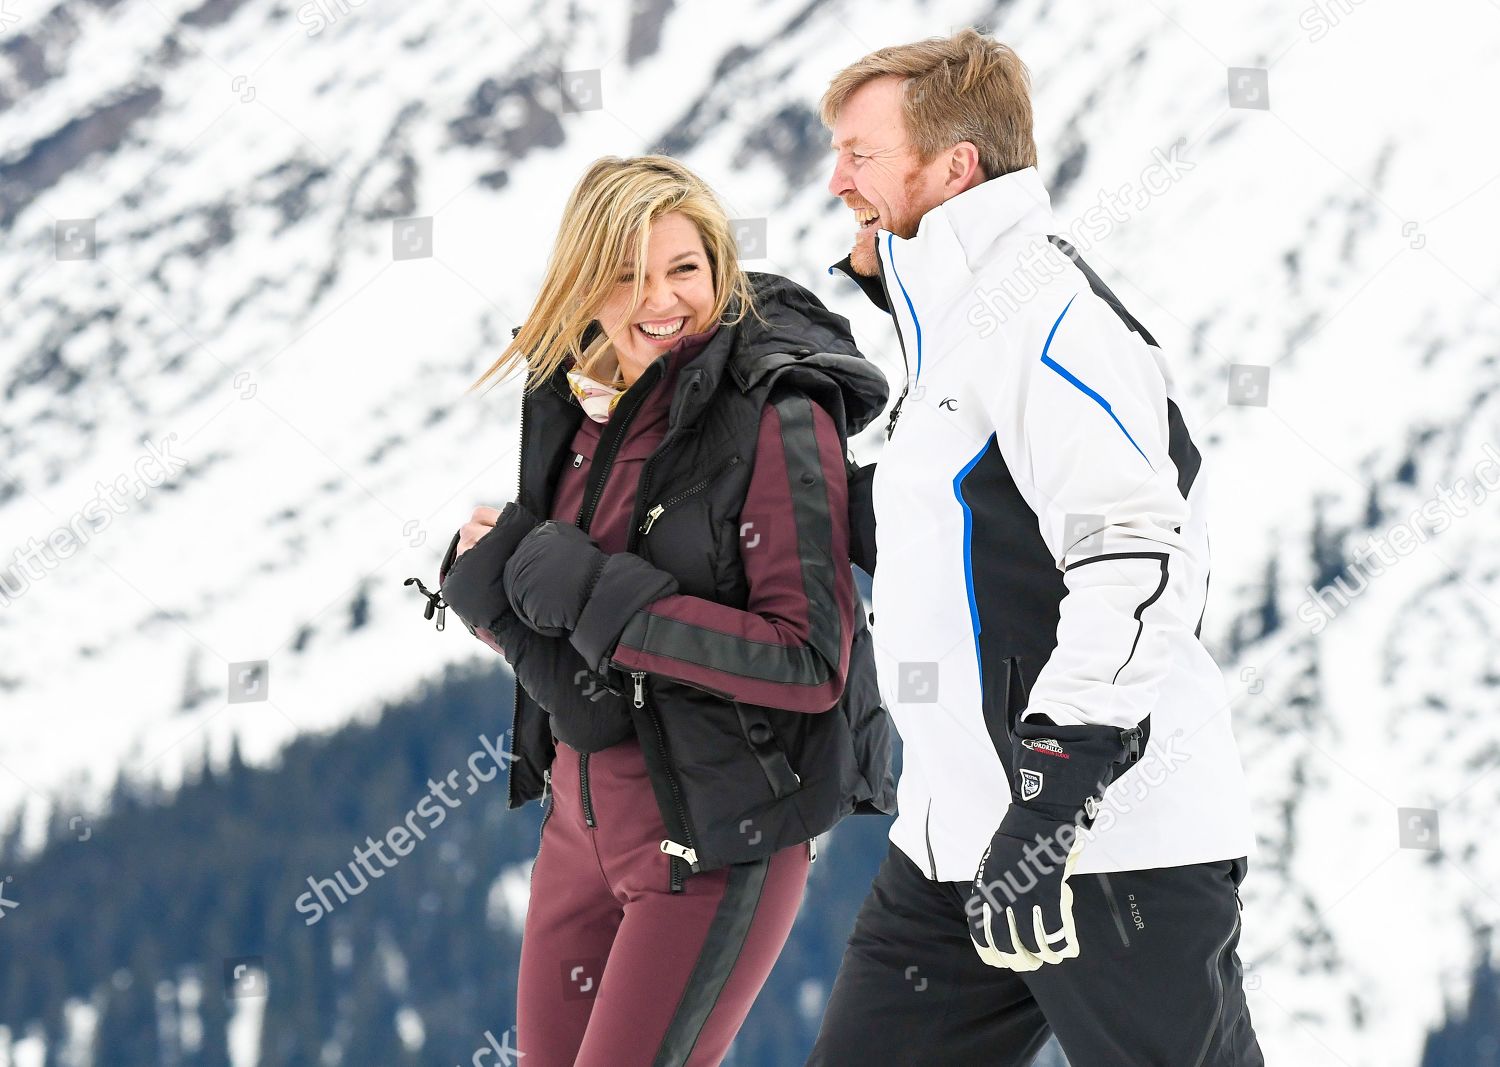 dutch-royal-family-winter-holiday-photocall-lech-austria-shutterstock-editorial-10566567ac.jpg